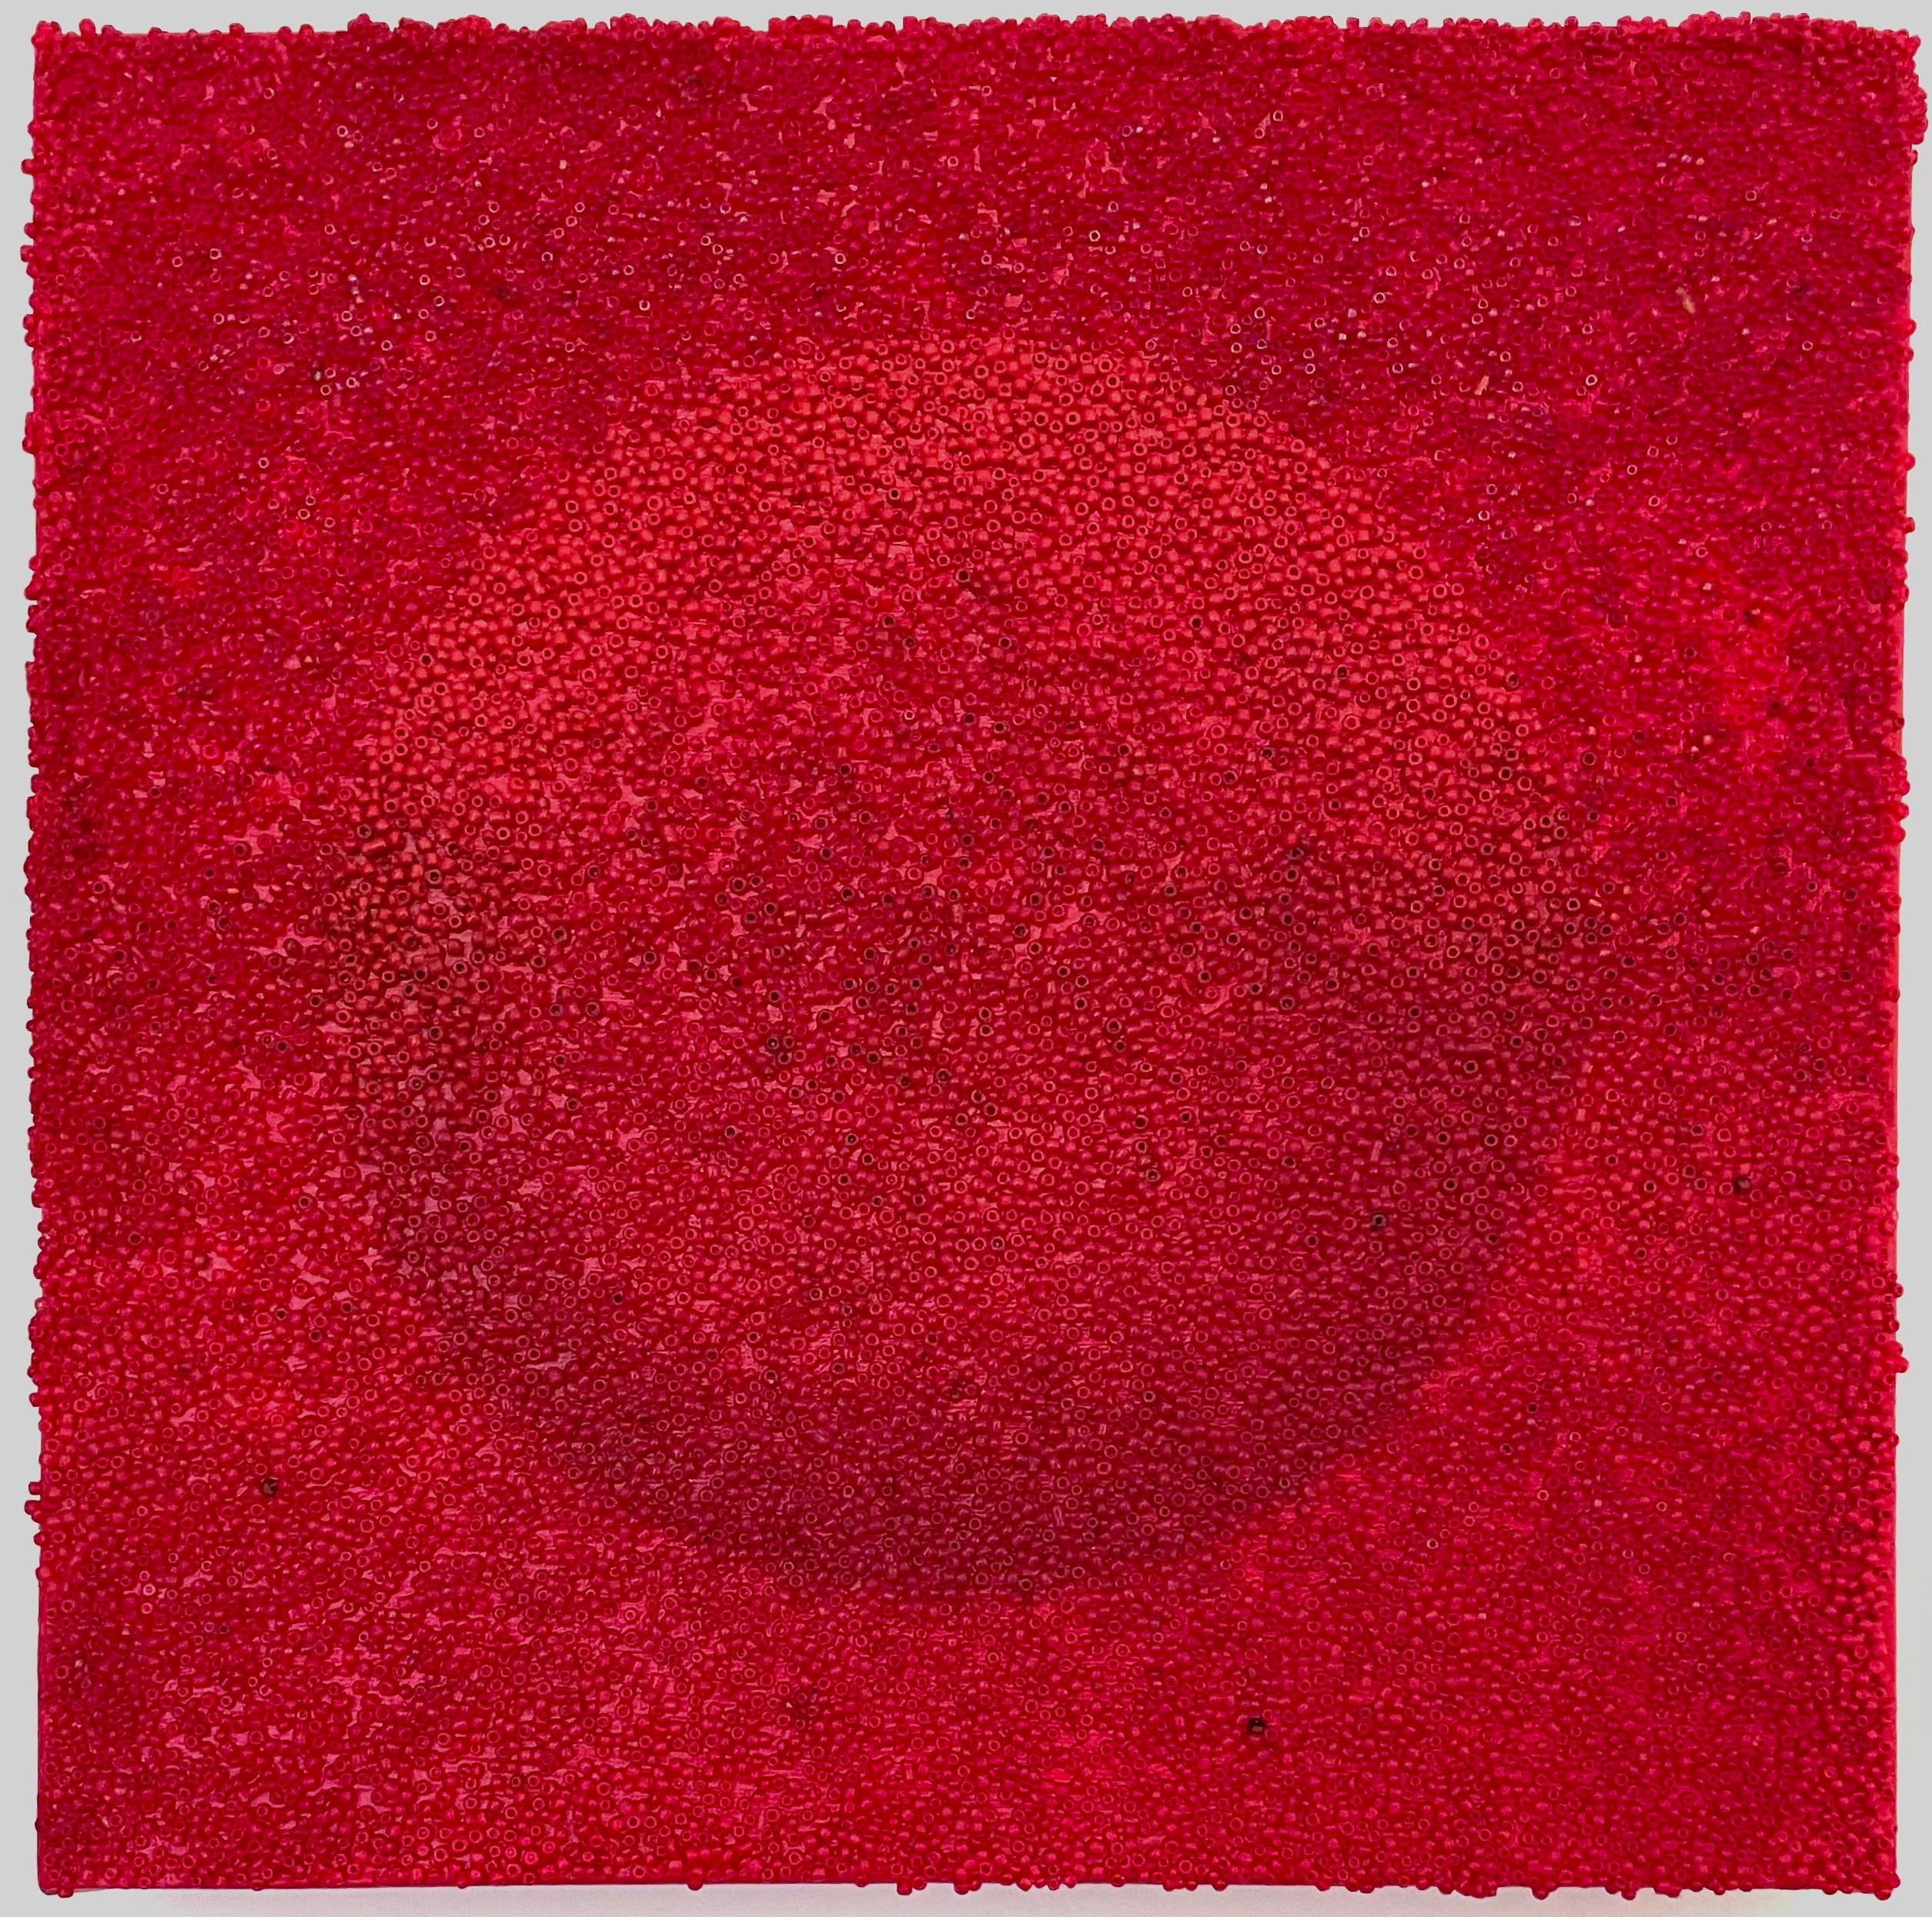 Antonio Puri Abstract Sculpture - Tantra 16: minimalist abstract Pop Art mandala sculpture painting, red circles